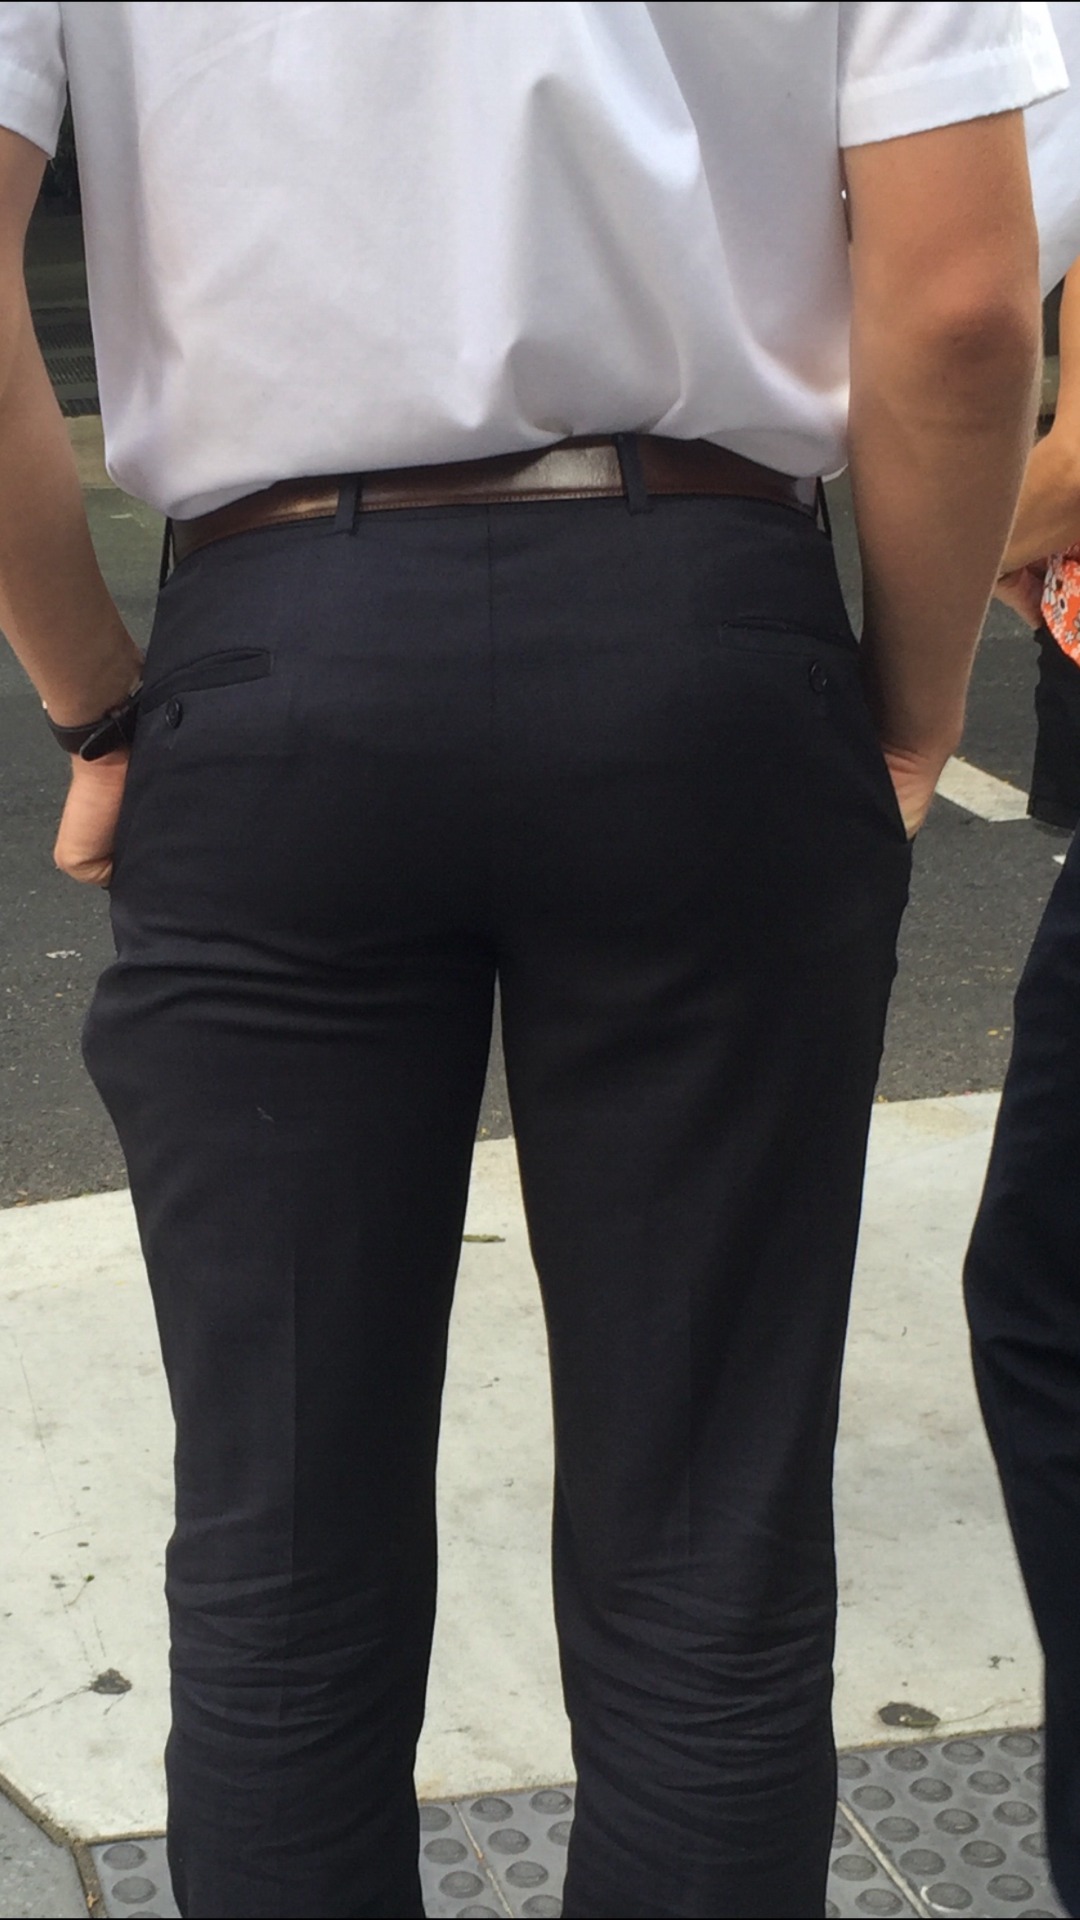 Mormon Butt